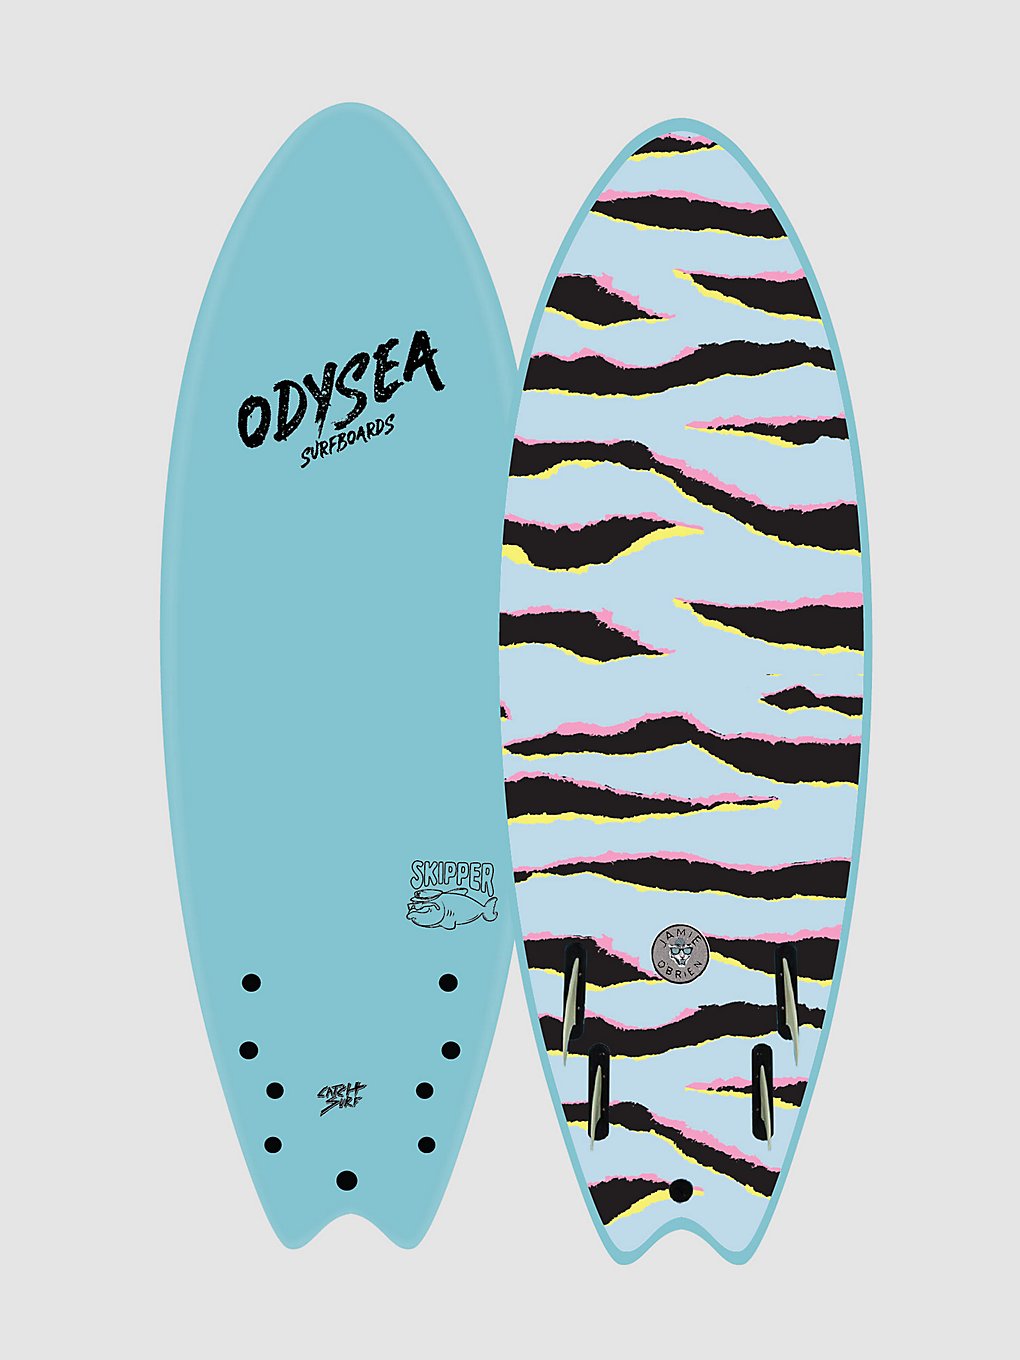 Catch Surf Odysea Skipper Pro Job Quad 6'0 Softtop Surfboard sky blue sk22